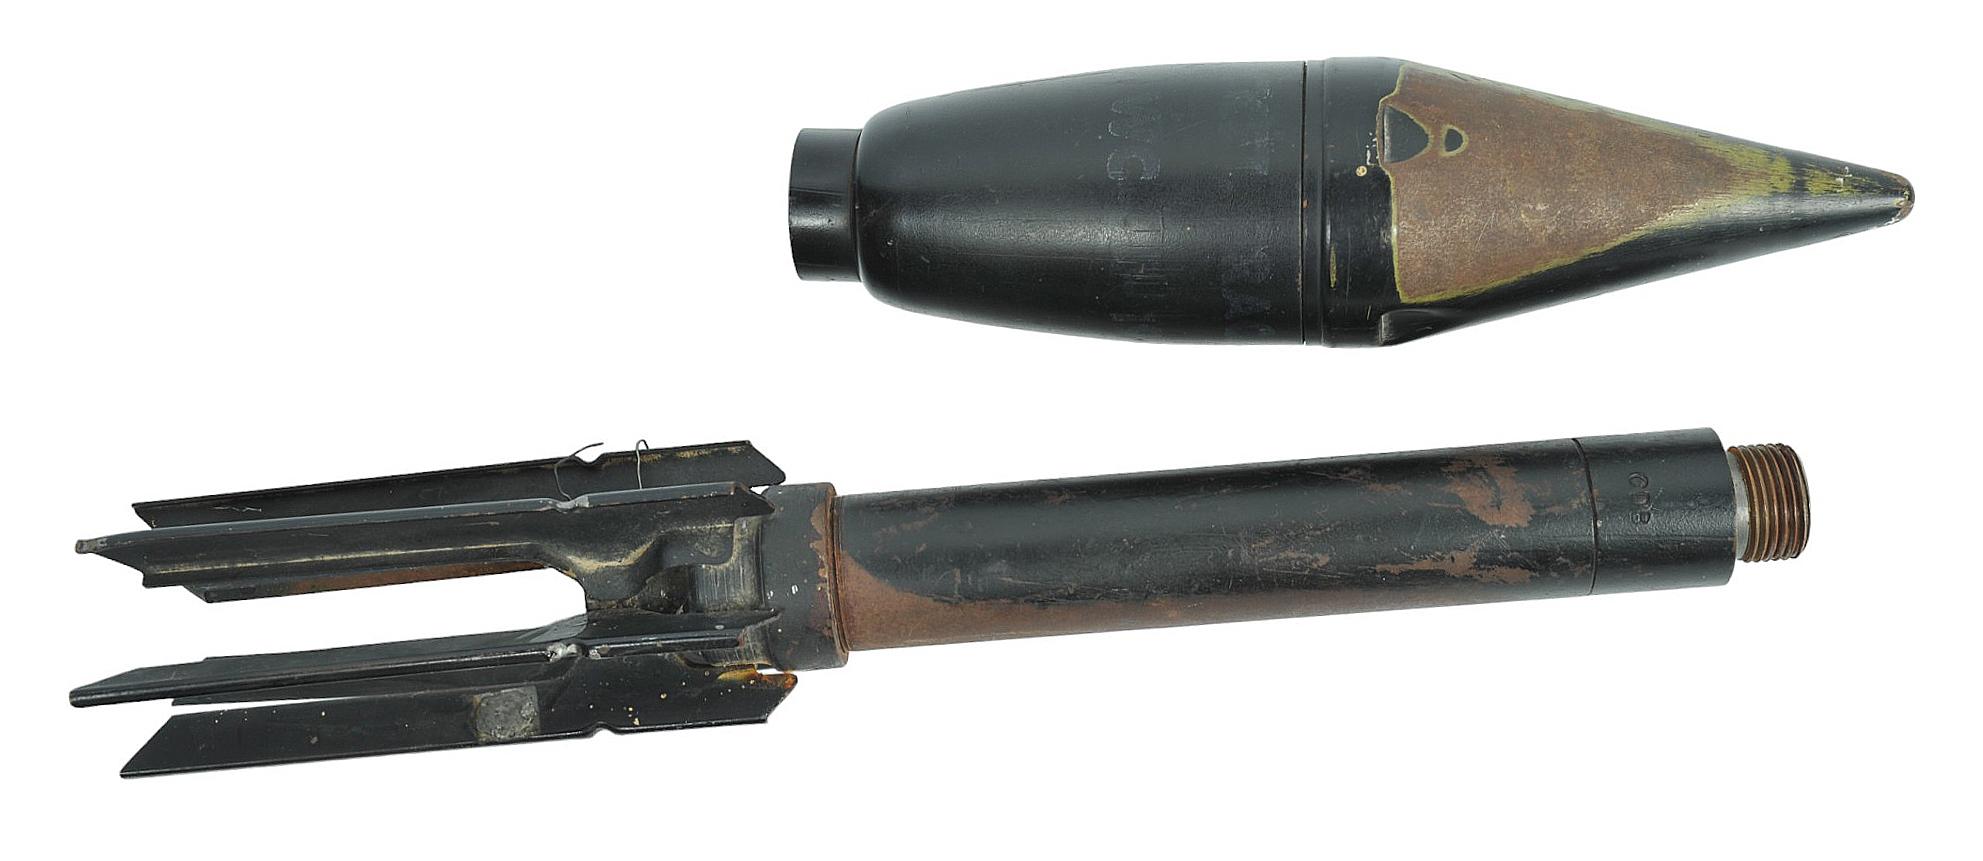 INERT US Military WWII era 2.75" Bazooka Rocket (KIS)